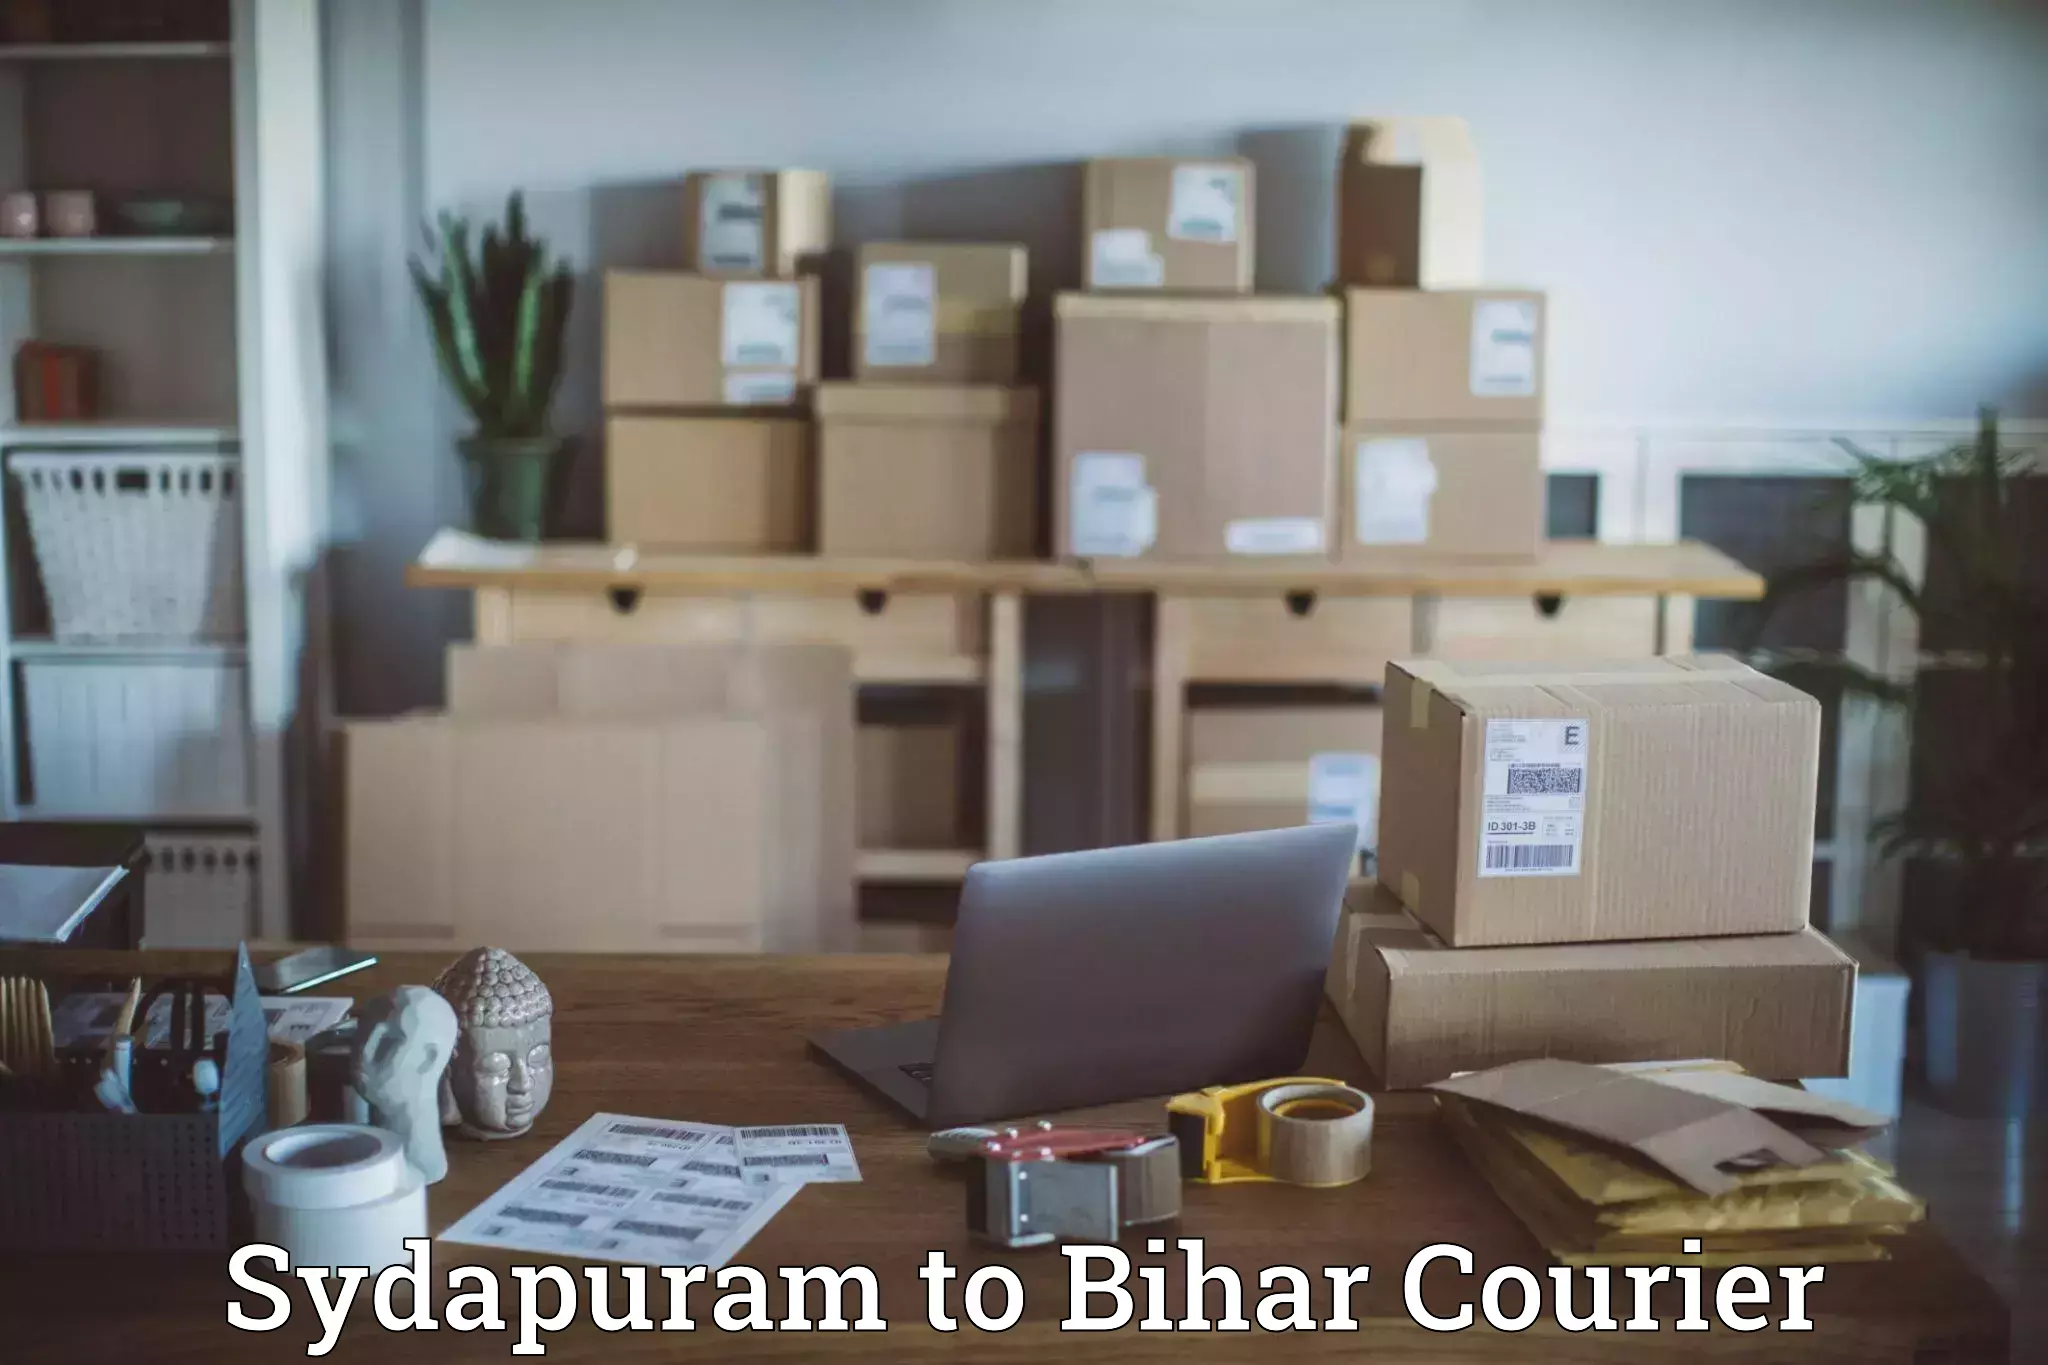 Courier service efficiency Sydapuram to Bihar